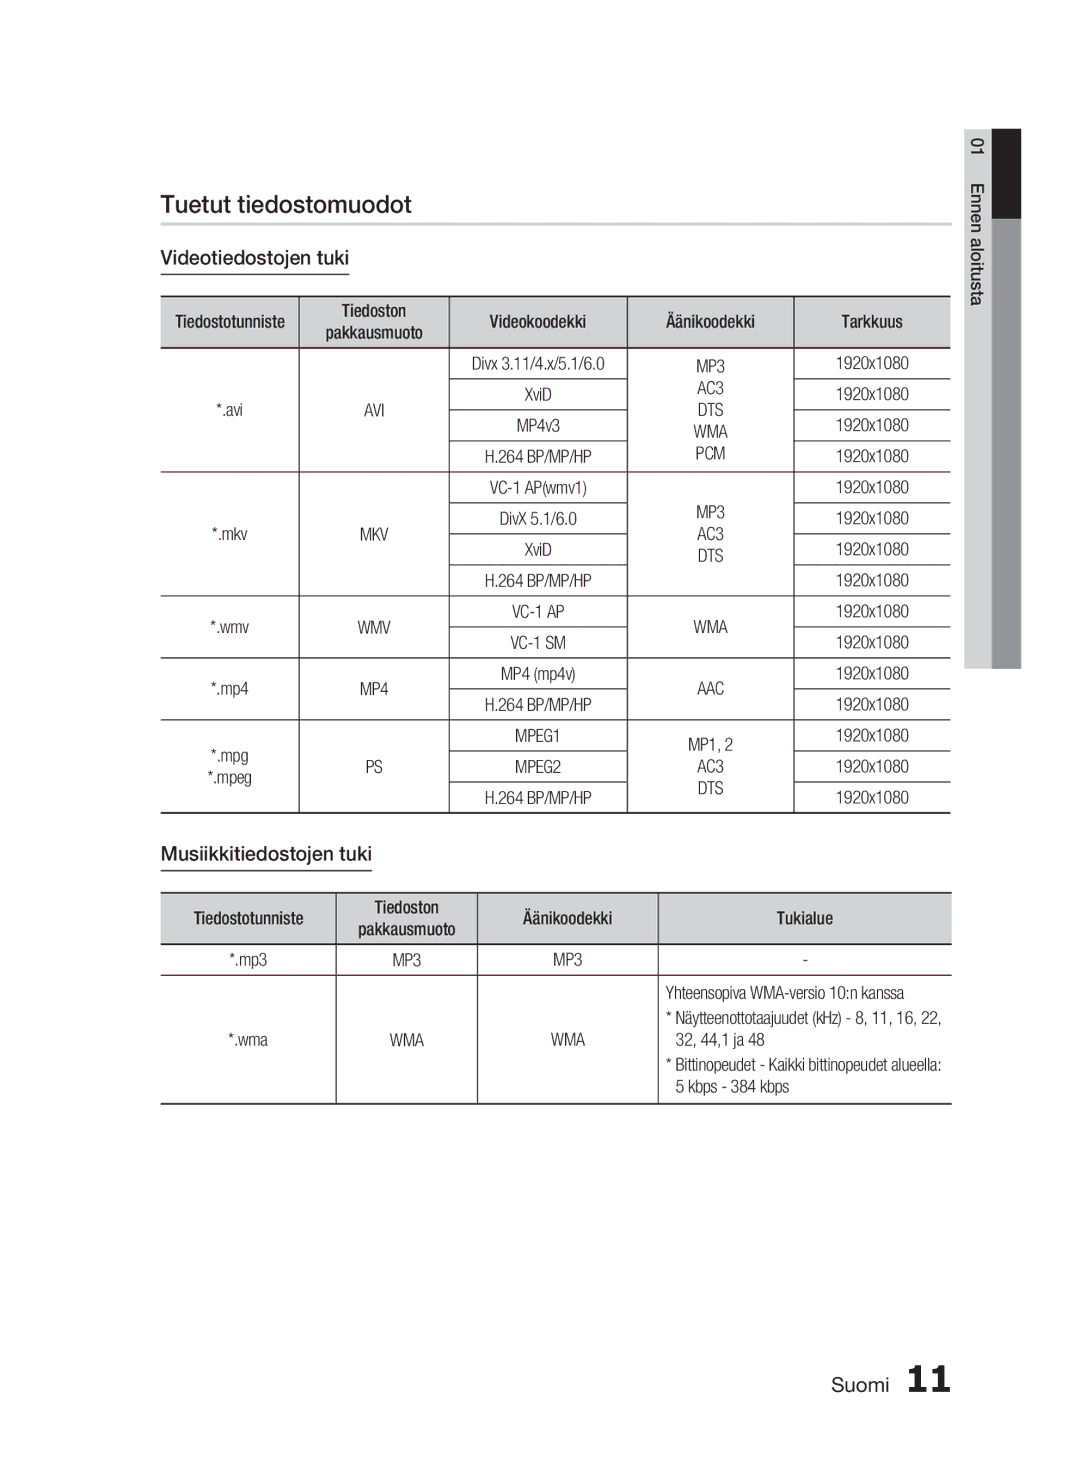 Samsung HT-C6500/XEE manual Tuetut tiedostomuodot, Videotiedostojen tuki, Musiikkitiedostojen tuki, AC3, Pcm 